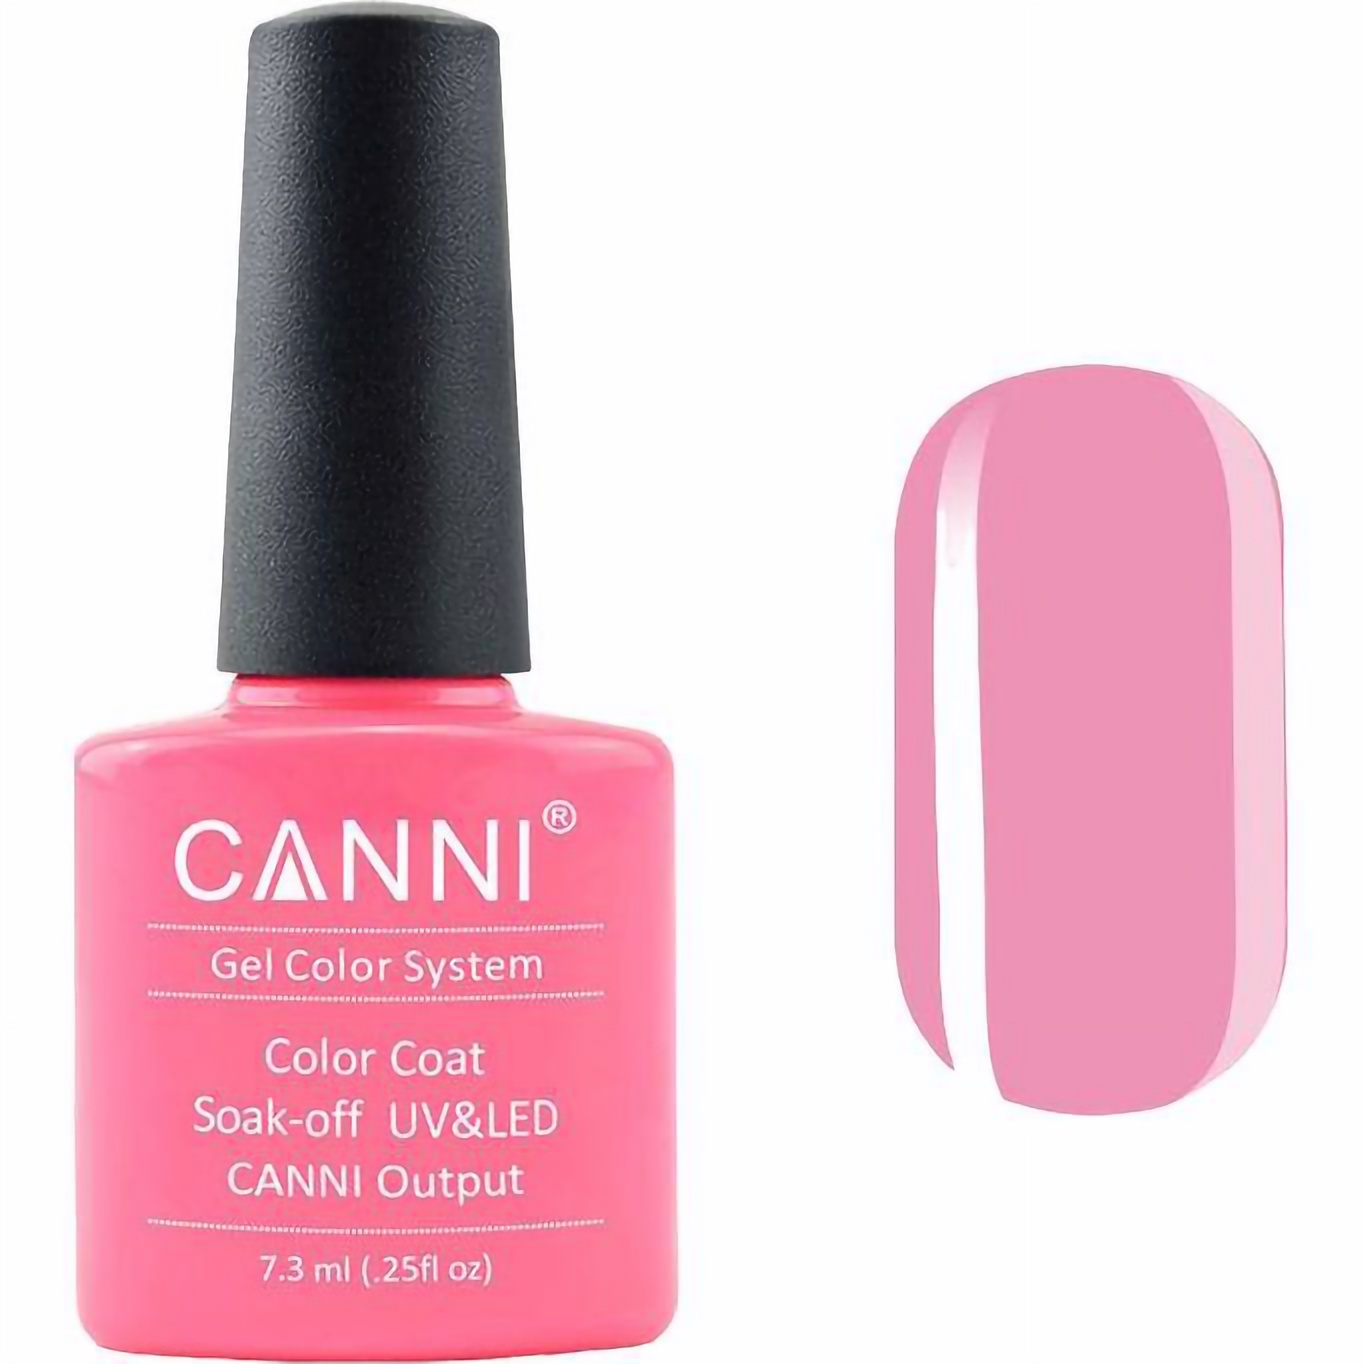 Гель-лак Canni Color Coat Soak-off UV&LED 109 классический розовый 7.3 мл - фото 1